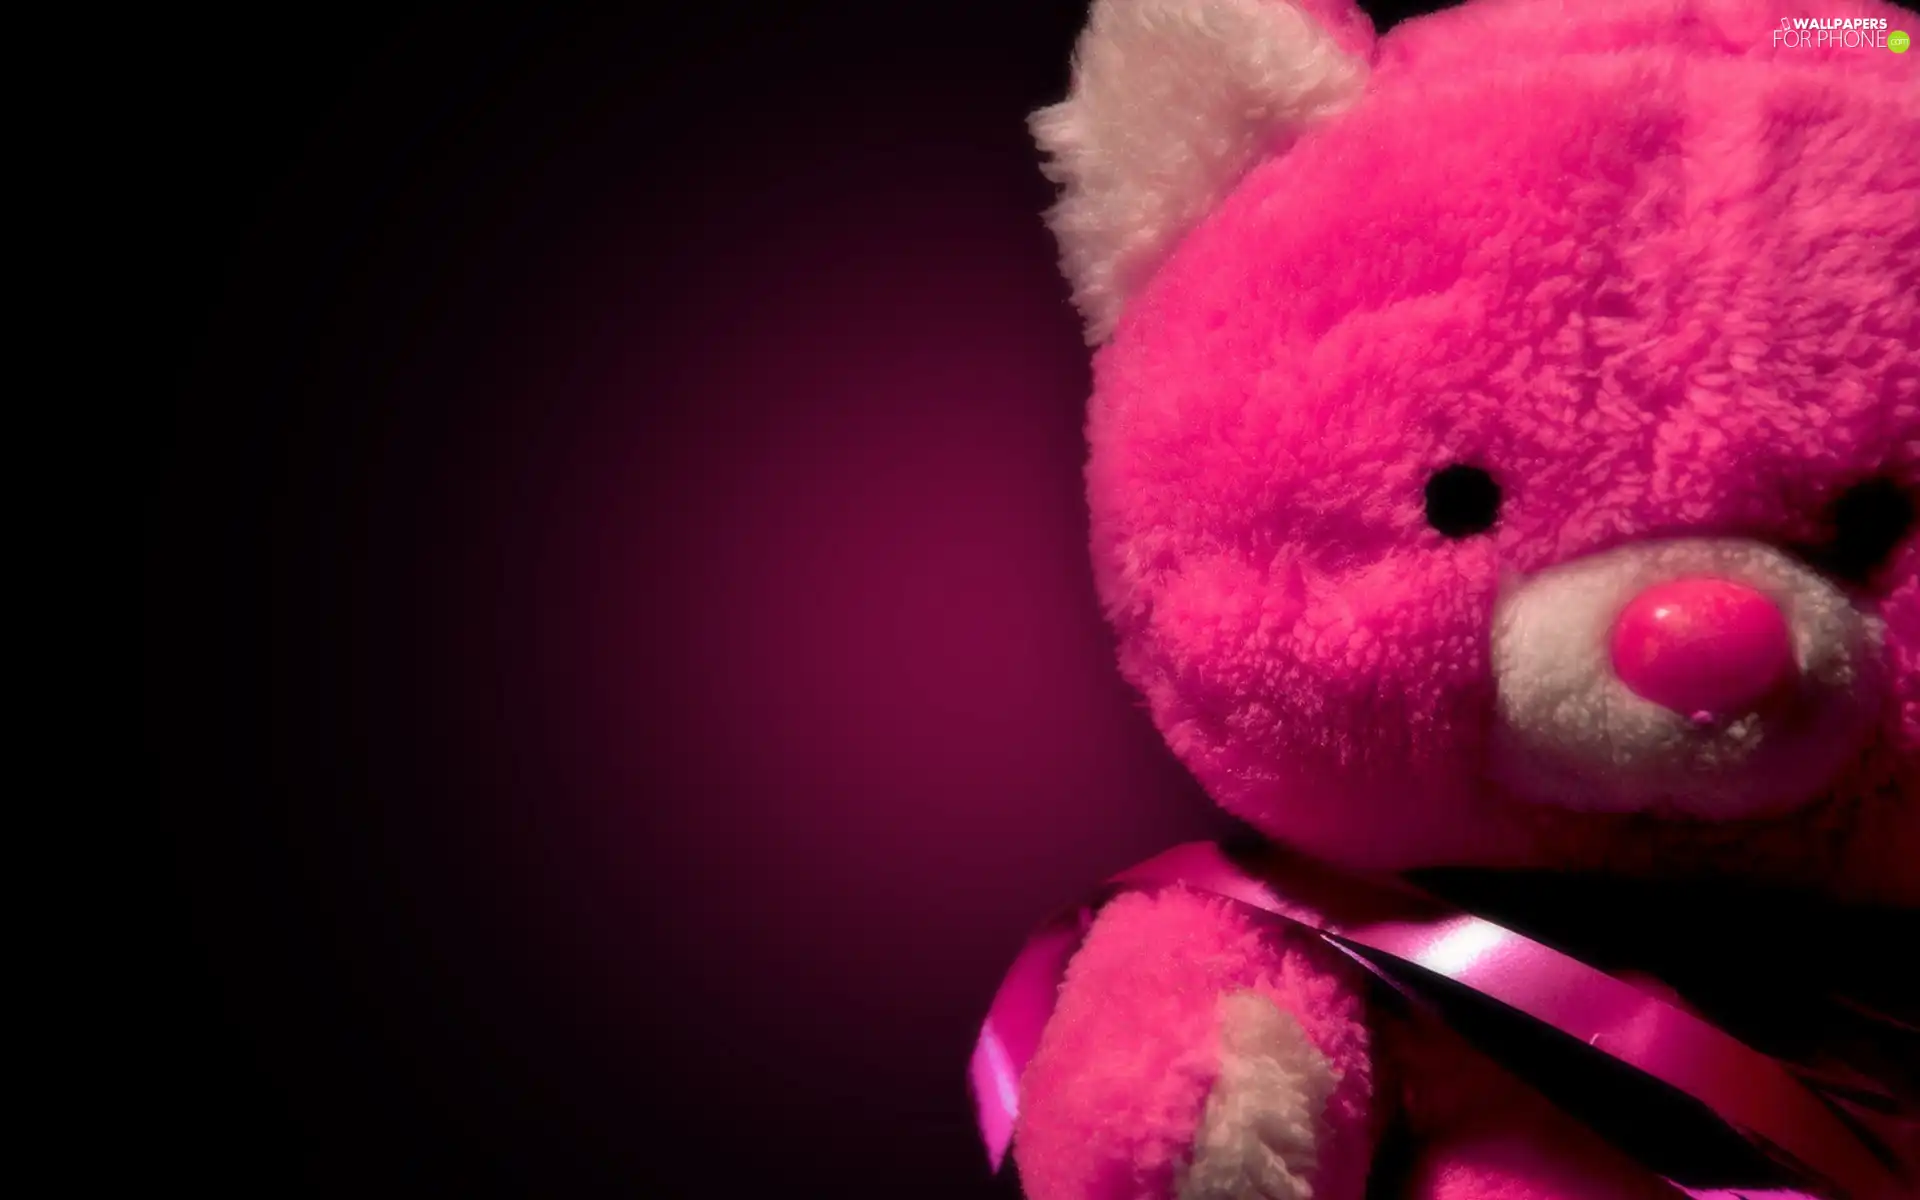 teddybear, Pink, Plush